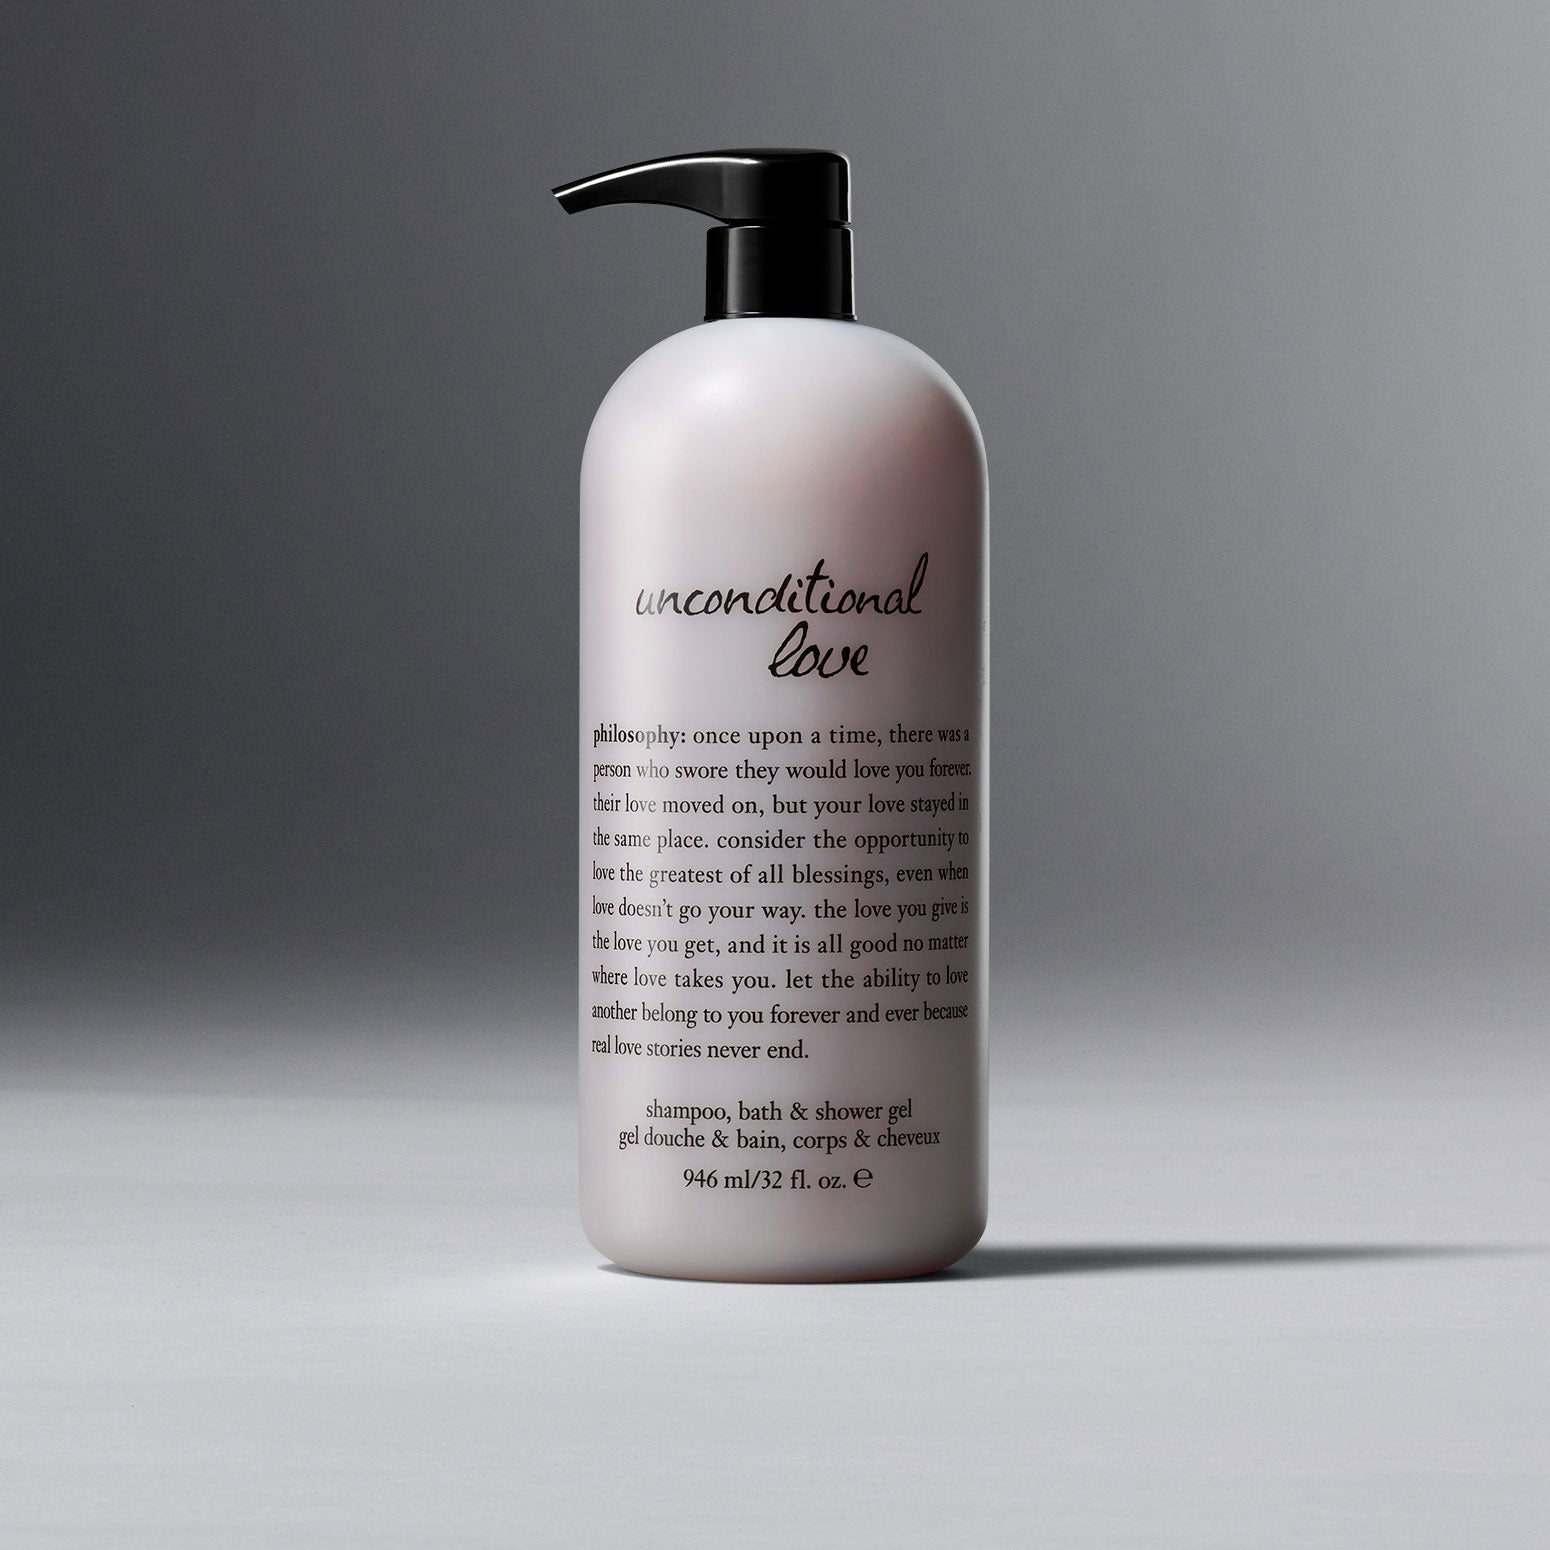 unconditional love shampoo, bath & gel – philosophy®